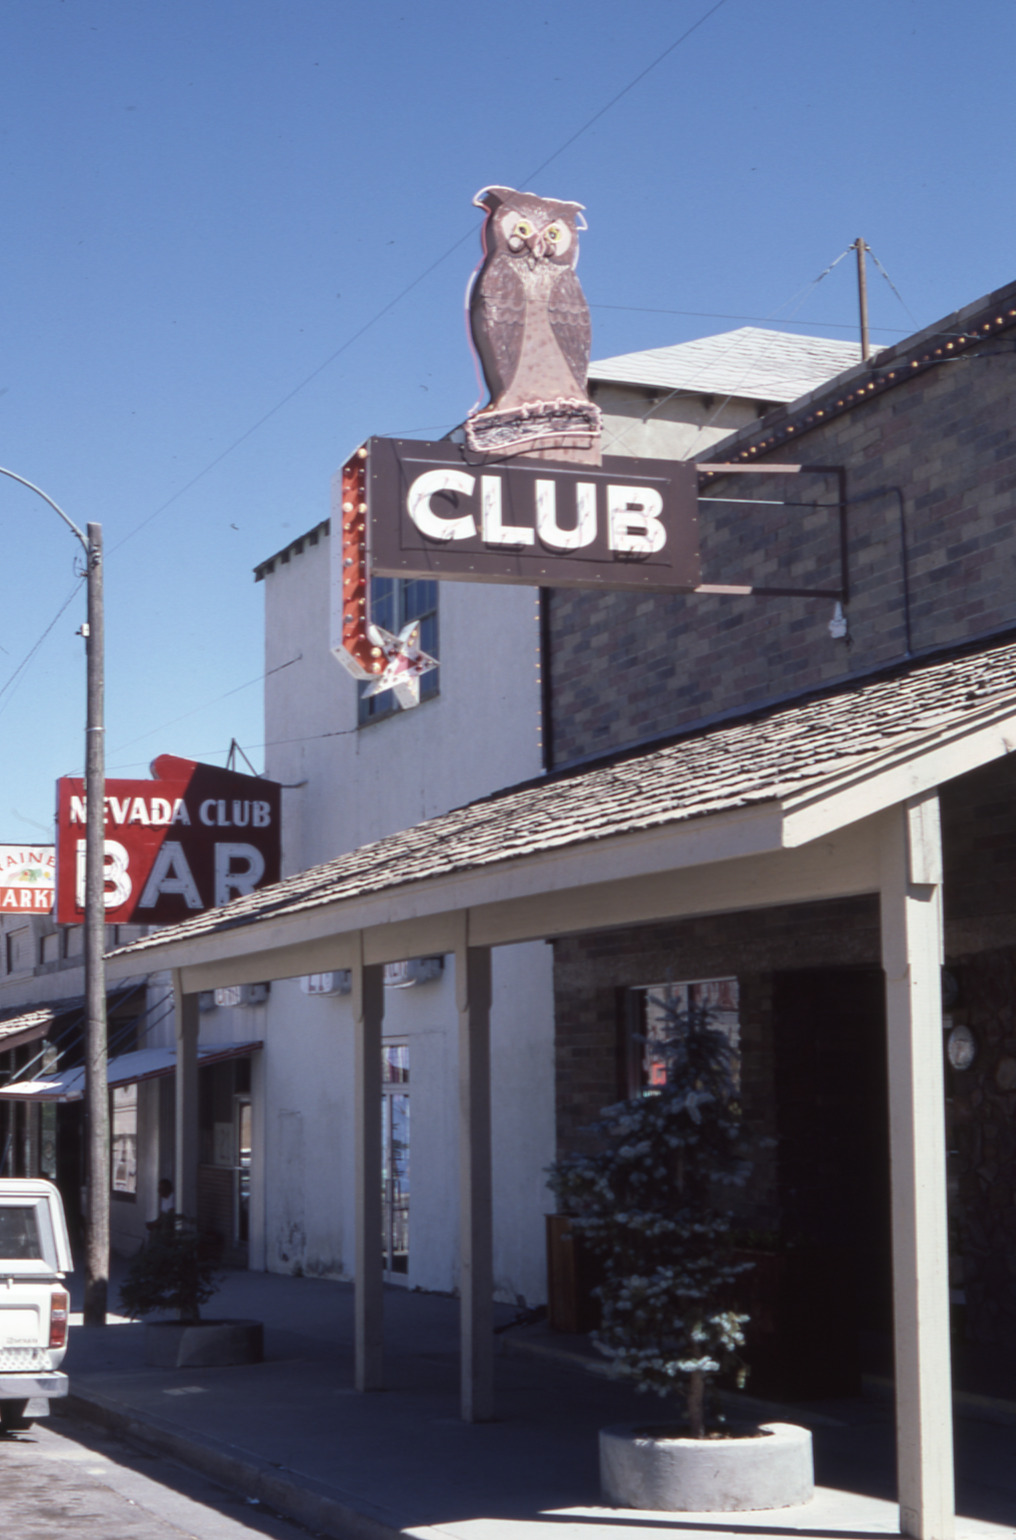 Owl Club flag mount wall sign, Eureka, Nevada: photographic print